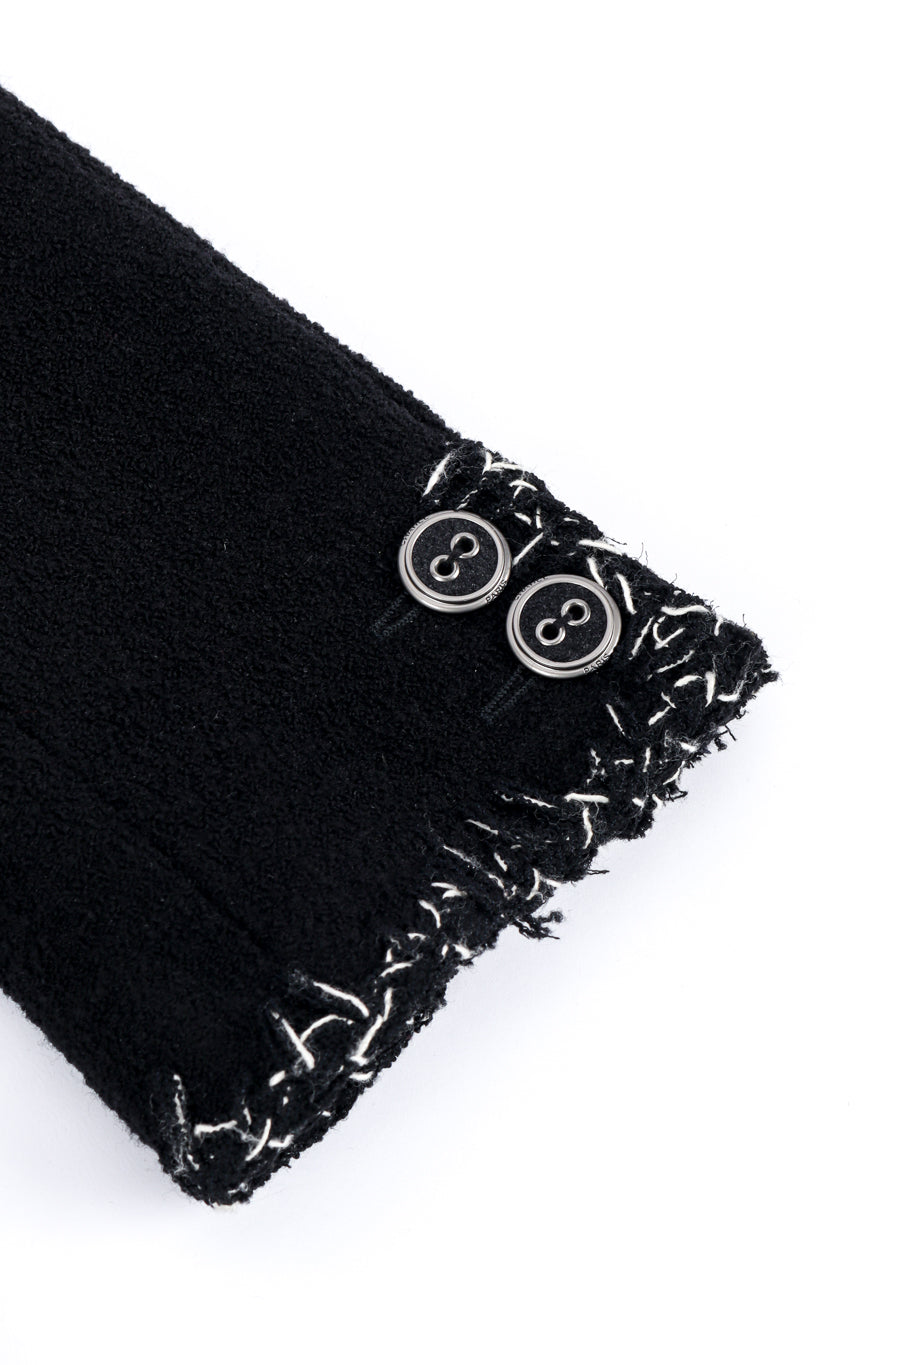 Chanel 2008 S Woven Stitch Trim Jacket sleeve closeup @recessla